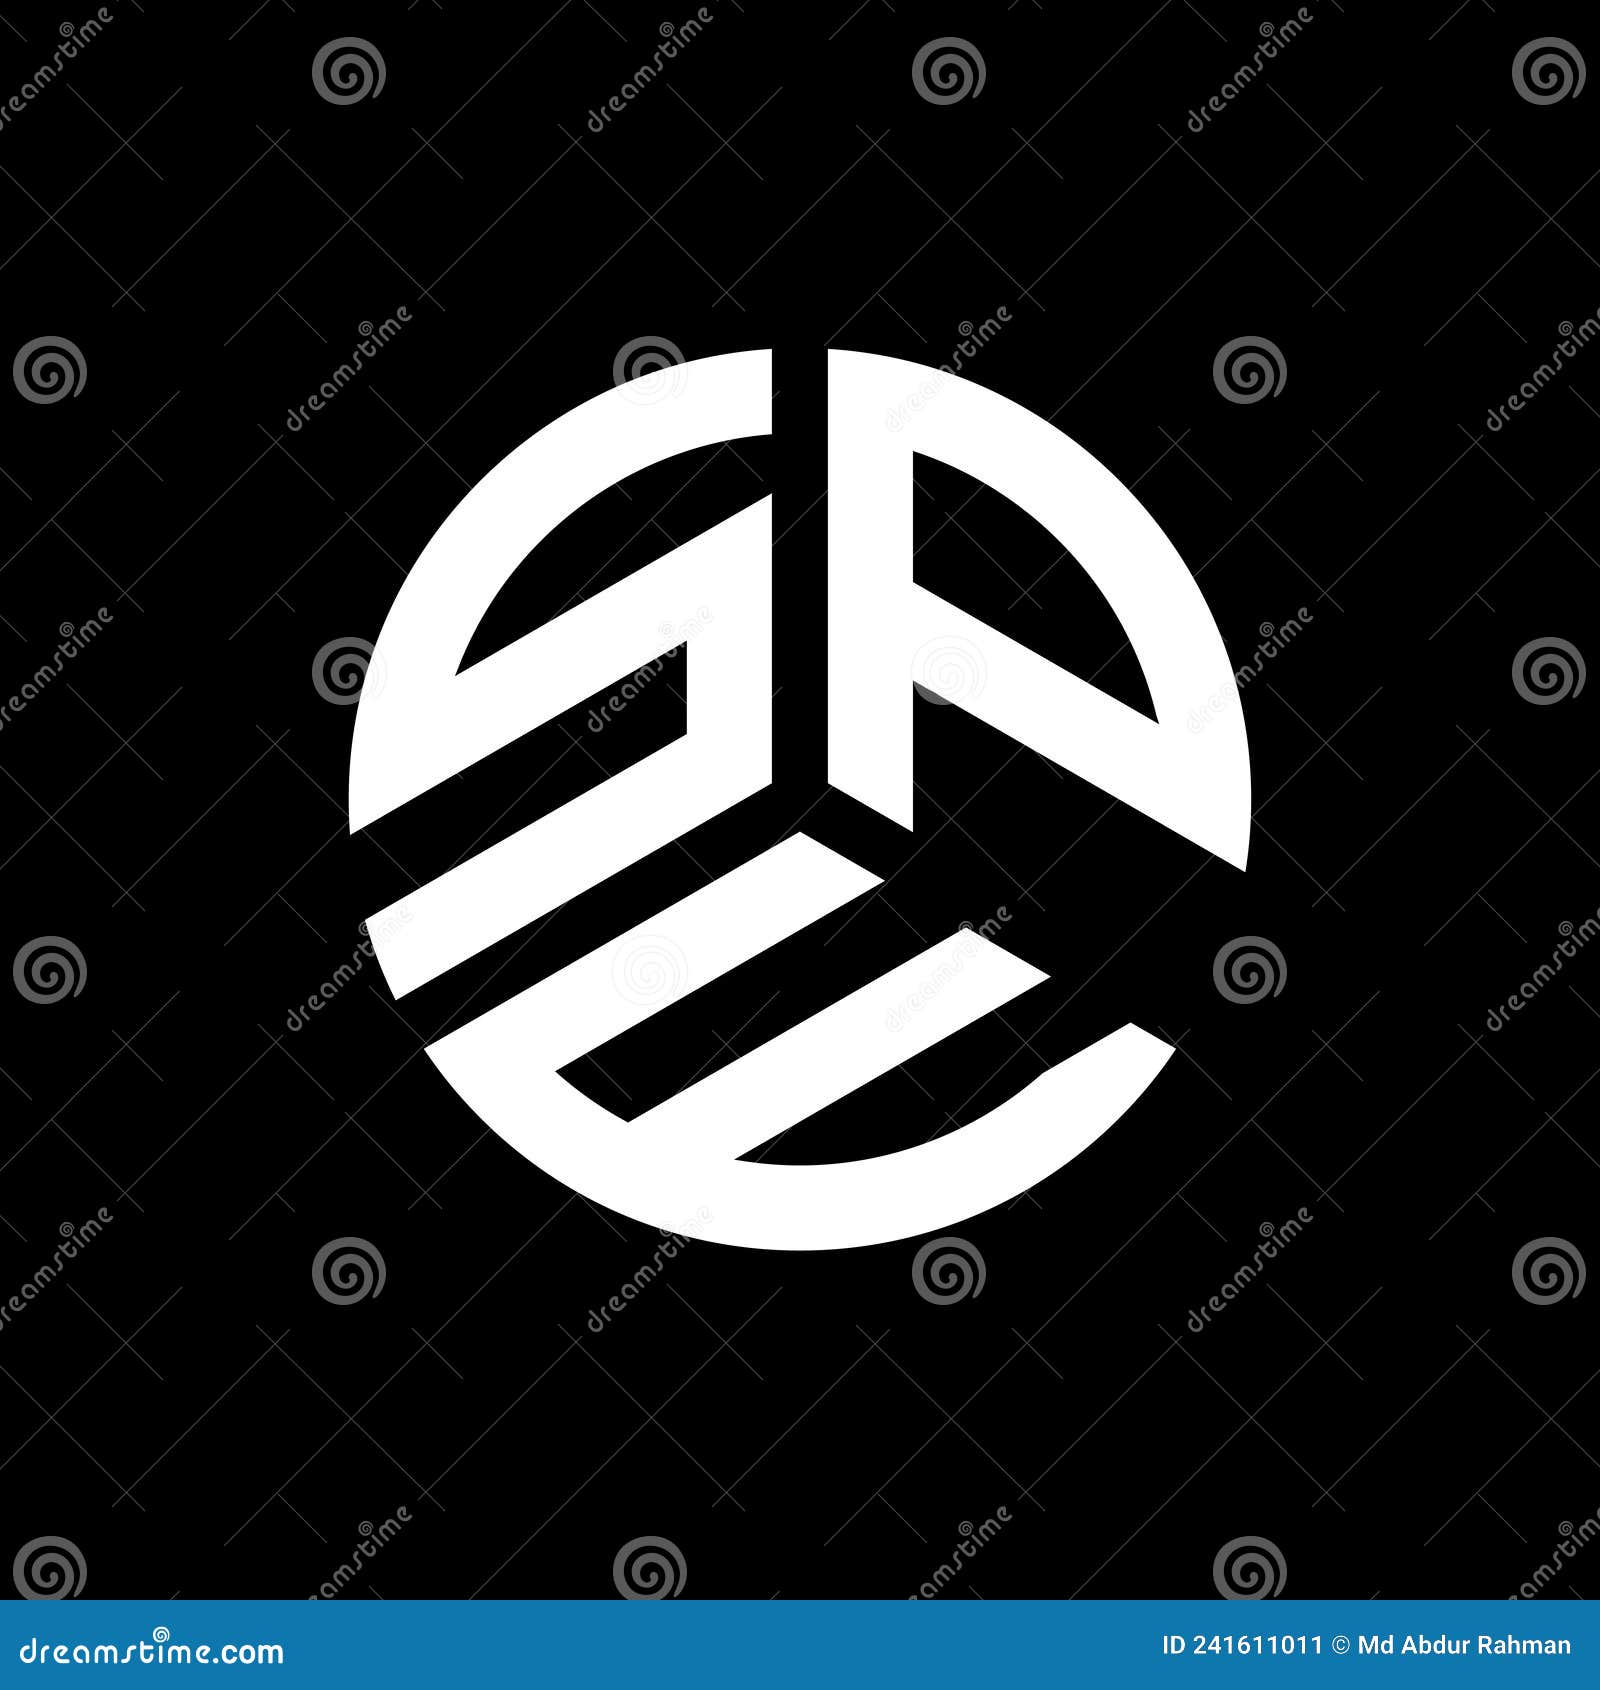 spe letter logo  on black background. spe creative initials letter logo concept. spe letter 